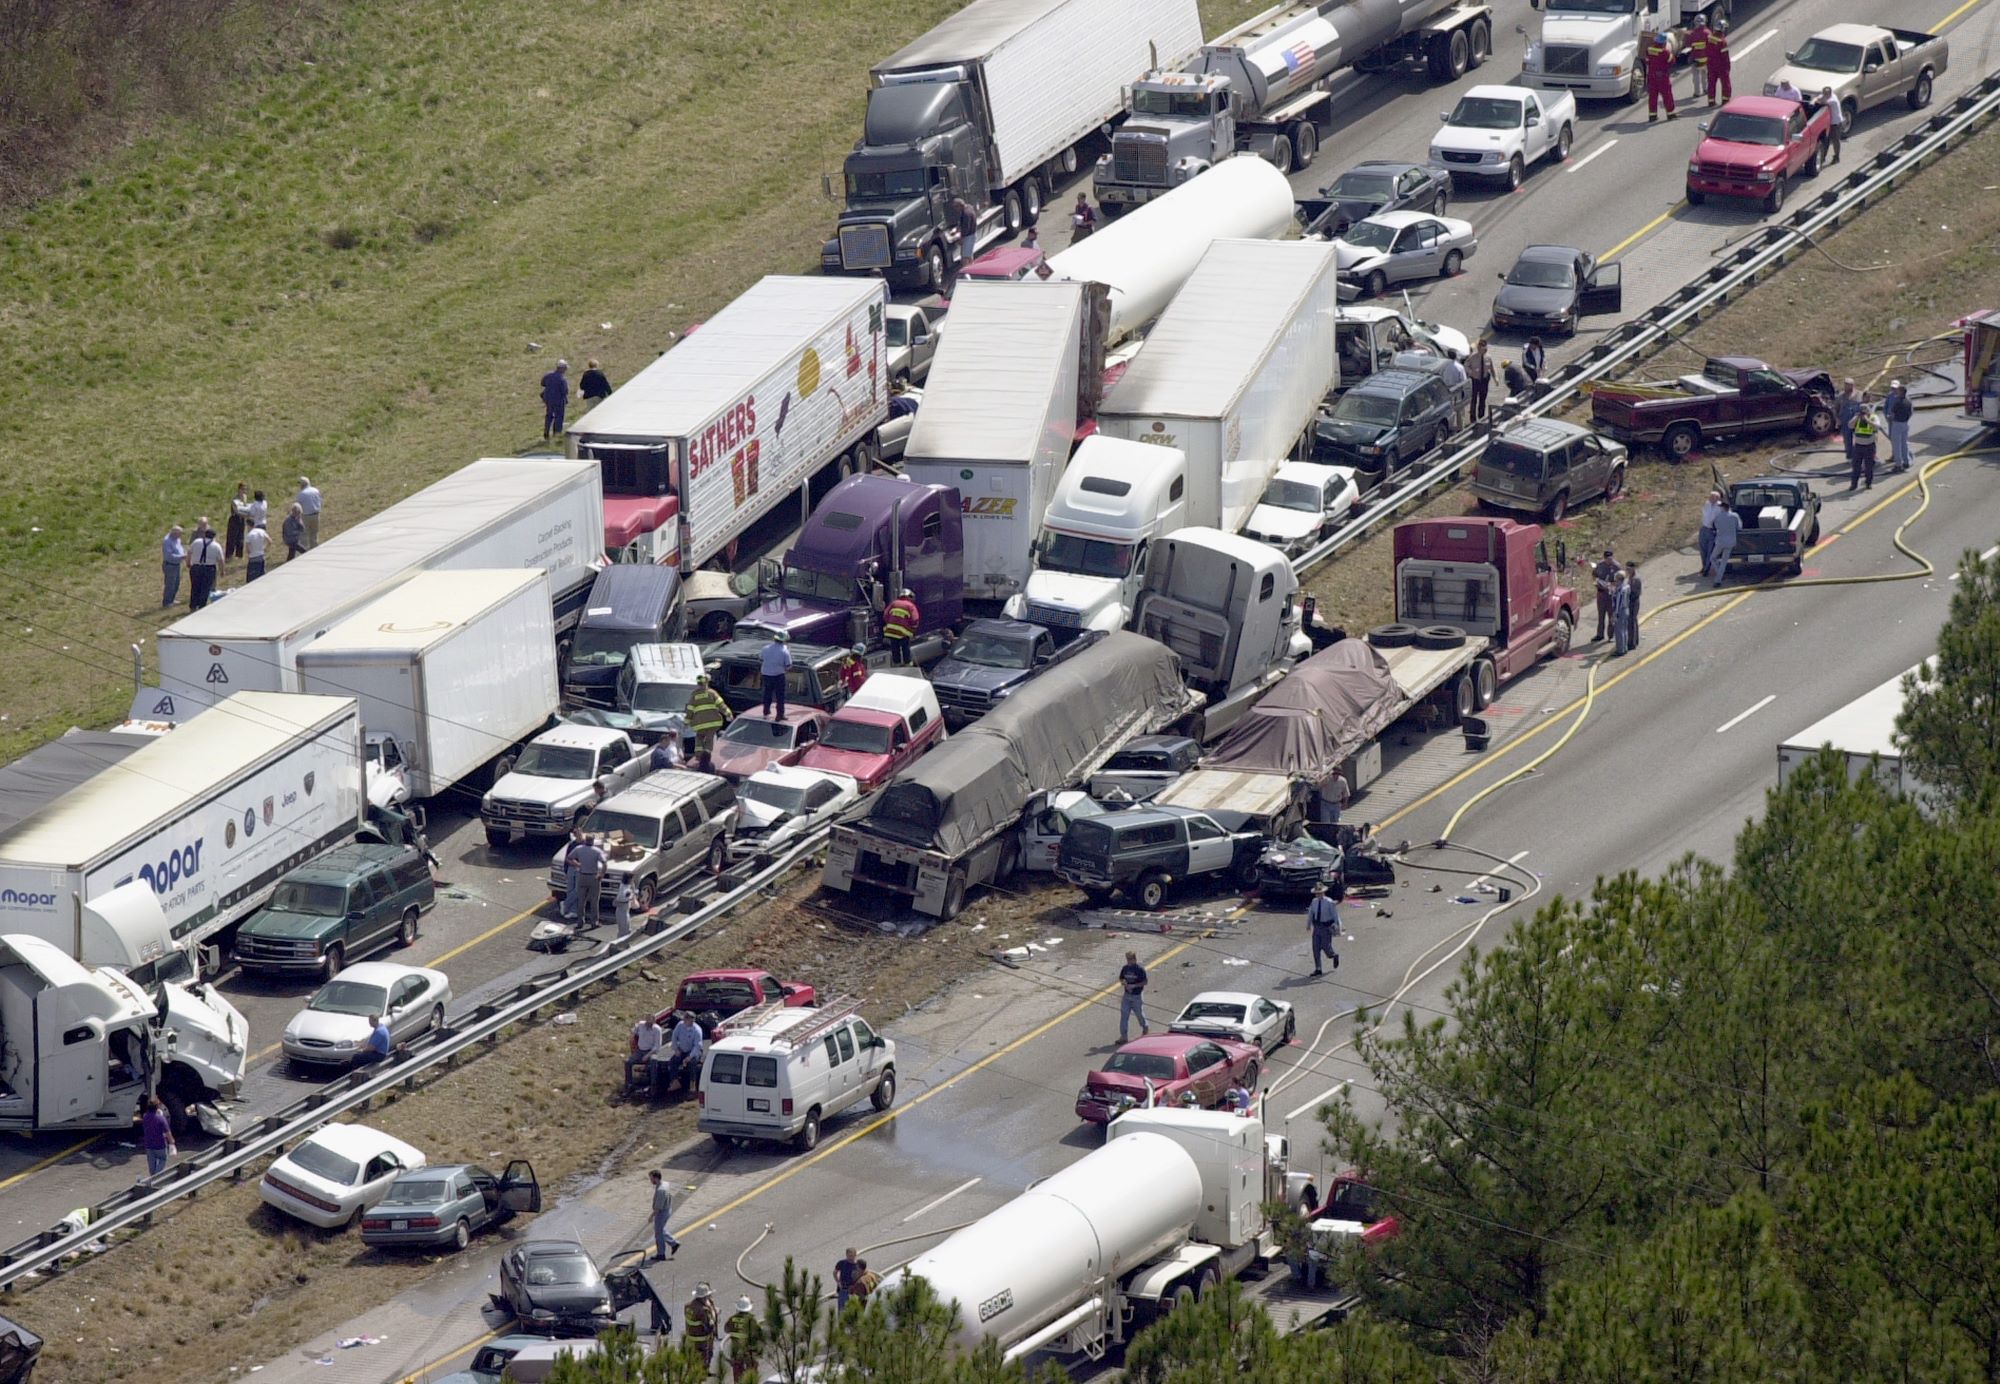 A multiple dearly car crash pileup on an interstate.